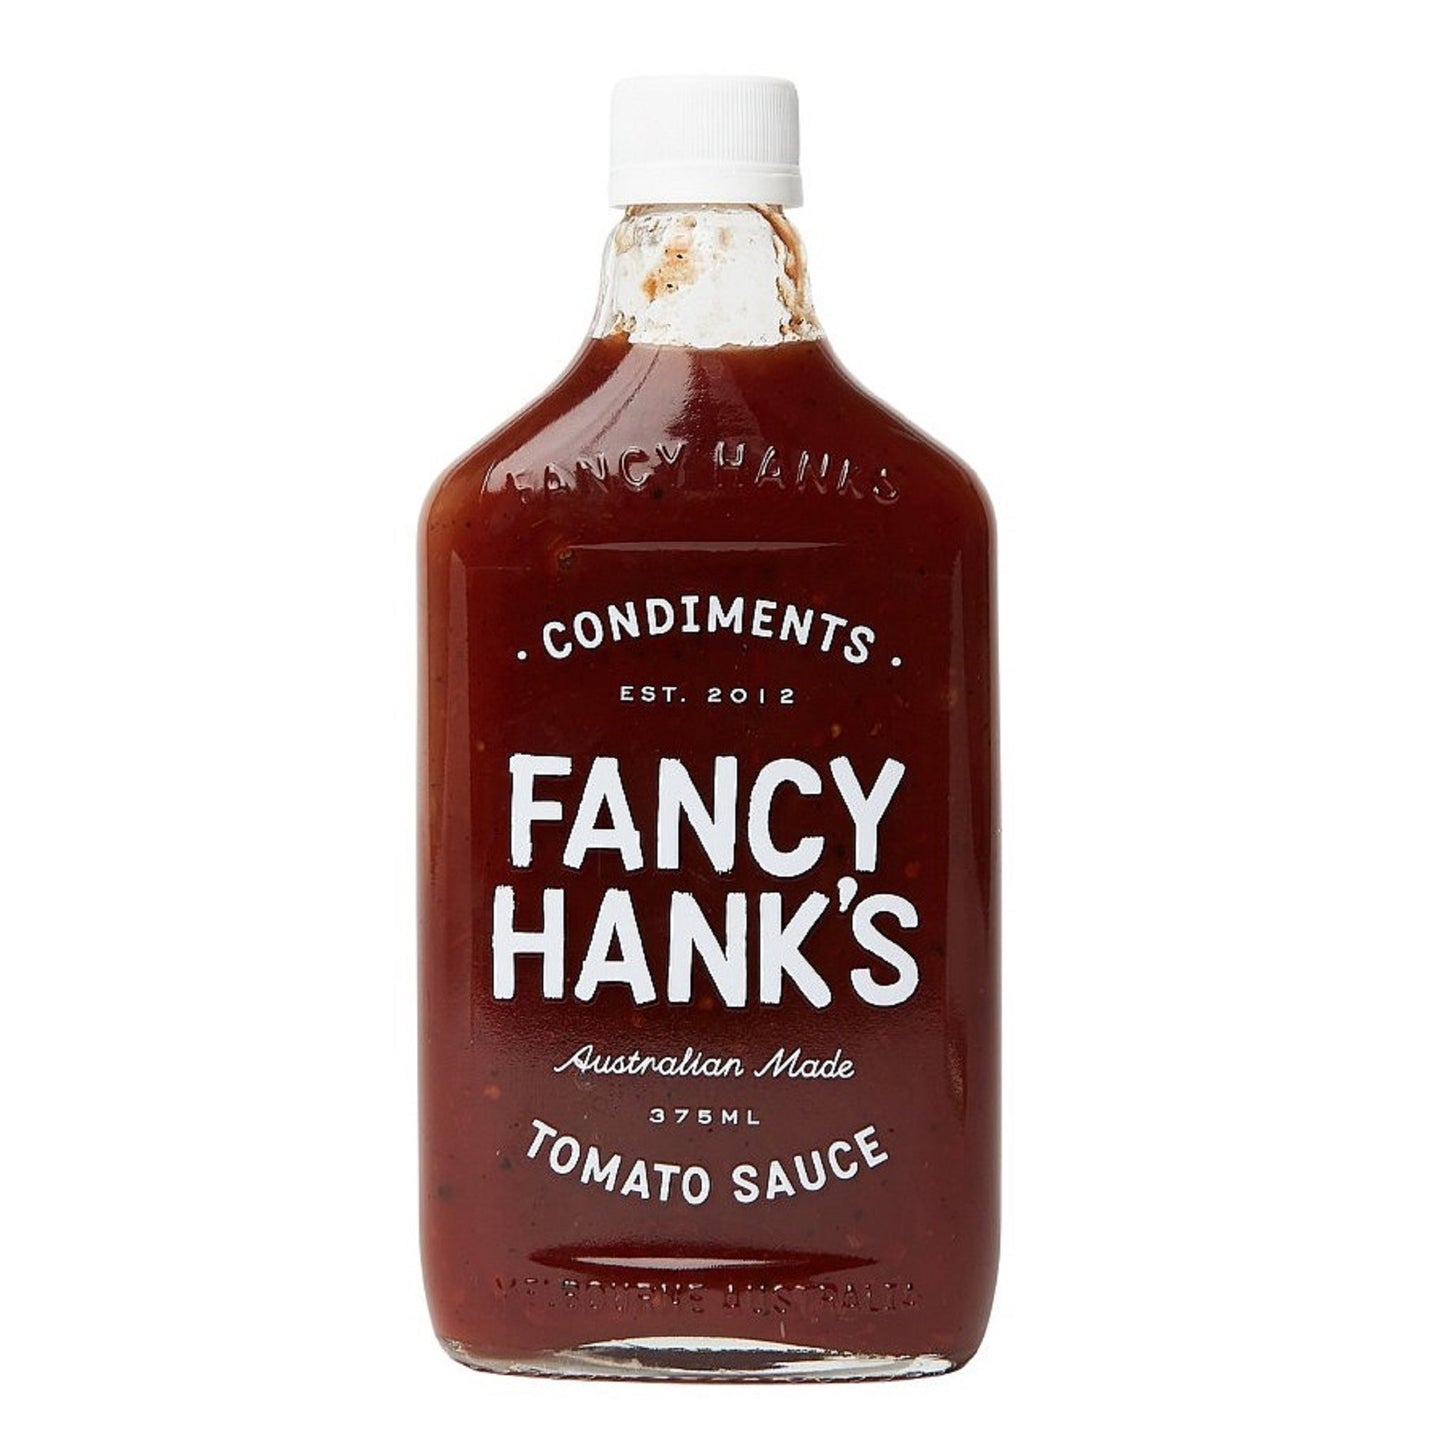 FANCY HANKS: Tomato Sauce – 375ml